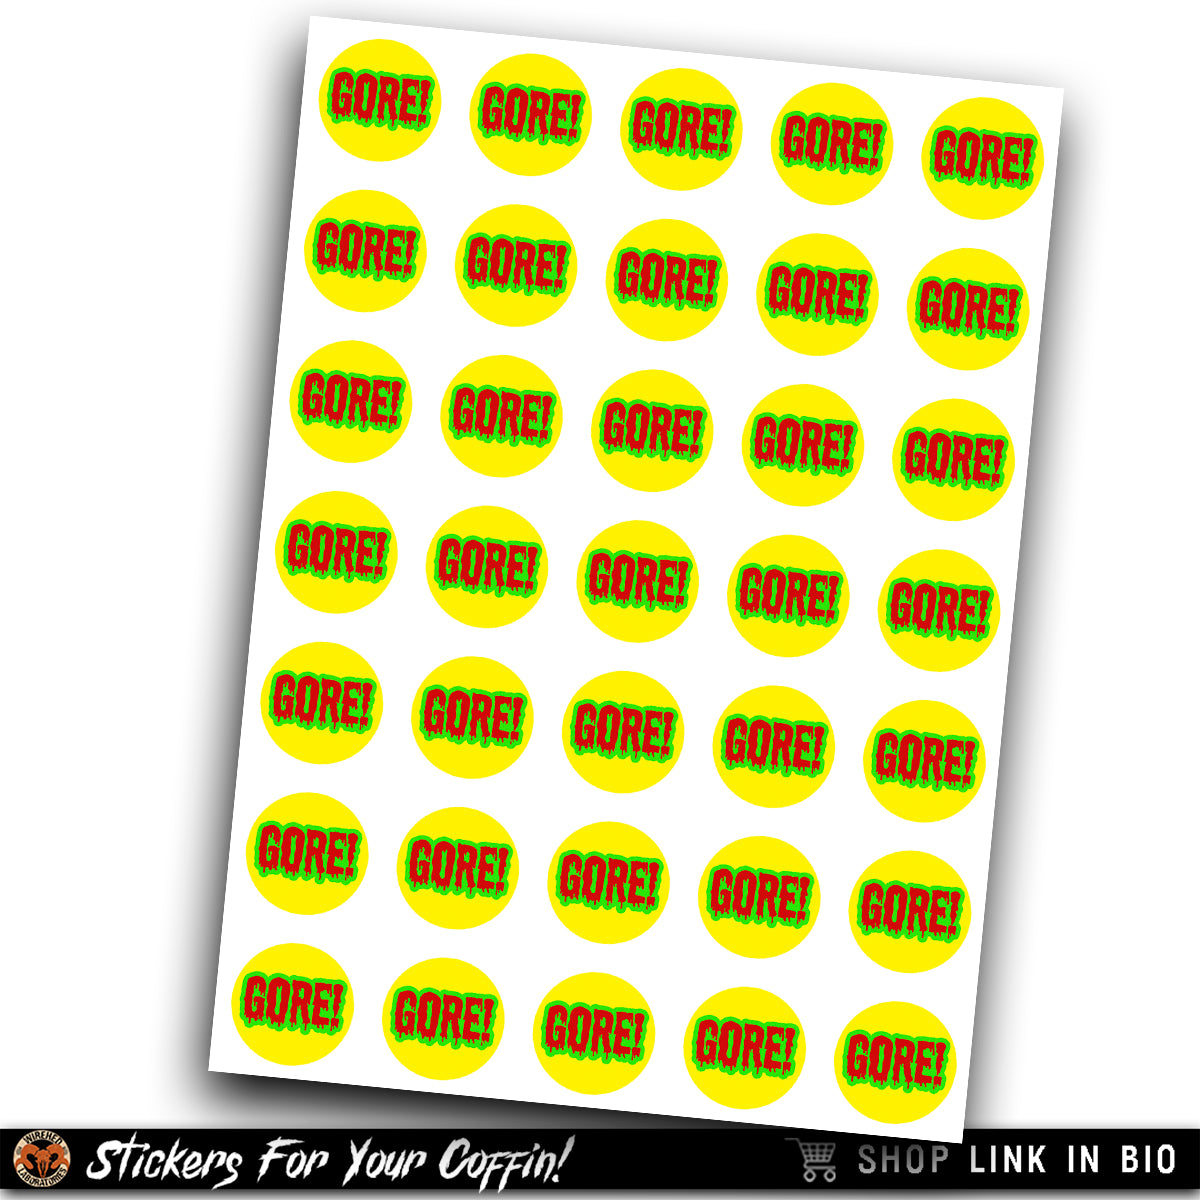 GORE! Section Sticker Sheet! 1 sheet of Thirty-five (35) 3/4" vinyl stickers!